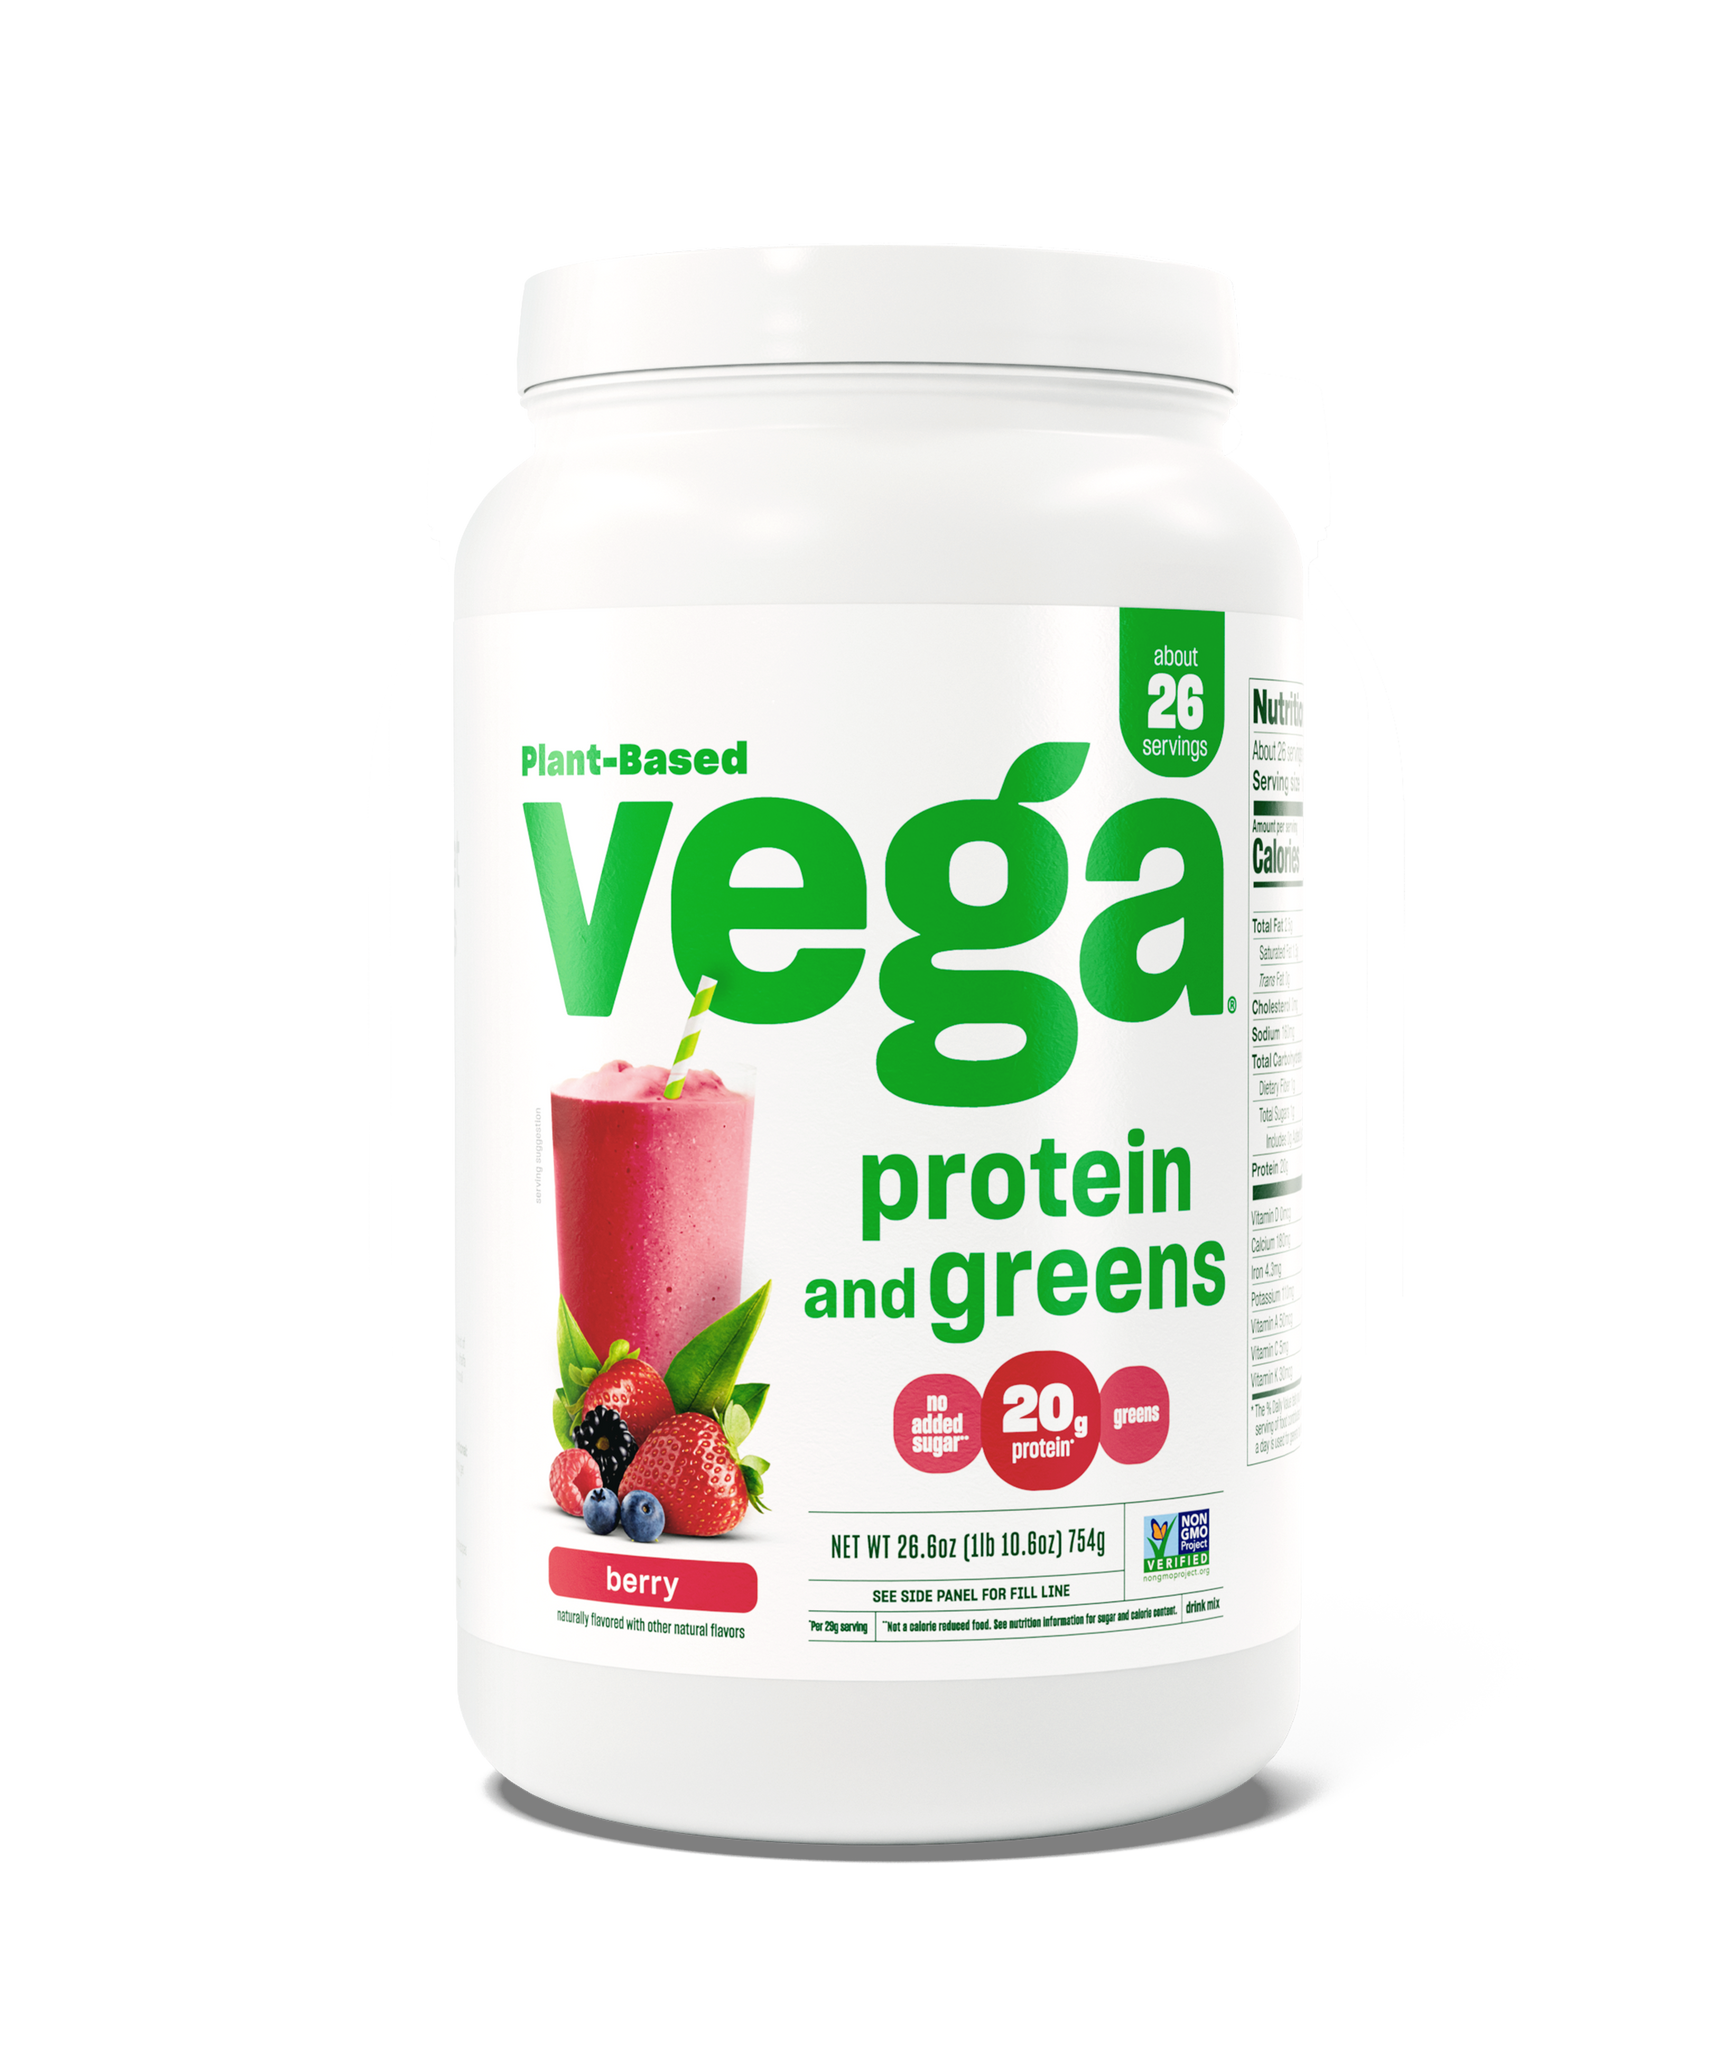 Vega® Protein & Greens #1 Plant-Based Protein Powder Brand – Vega (US)